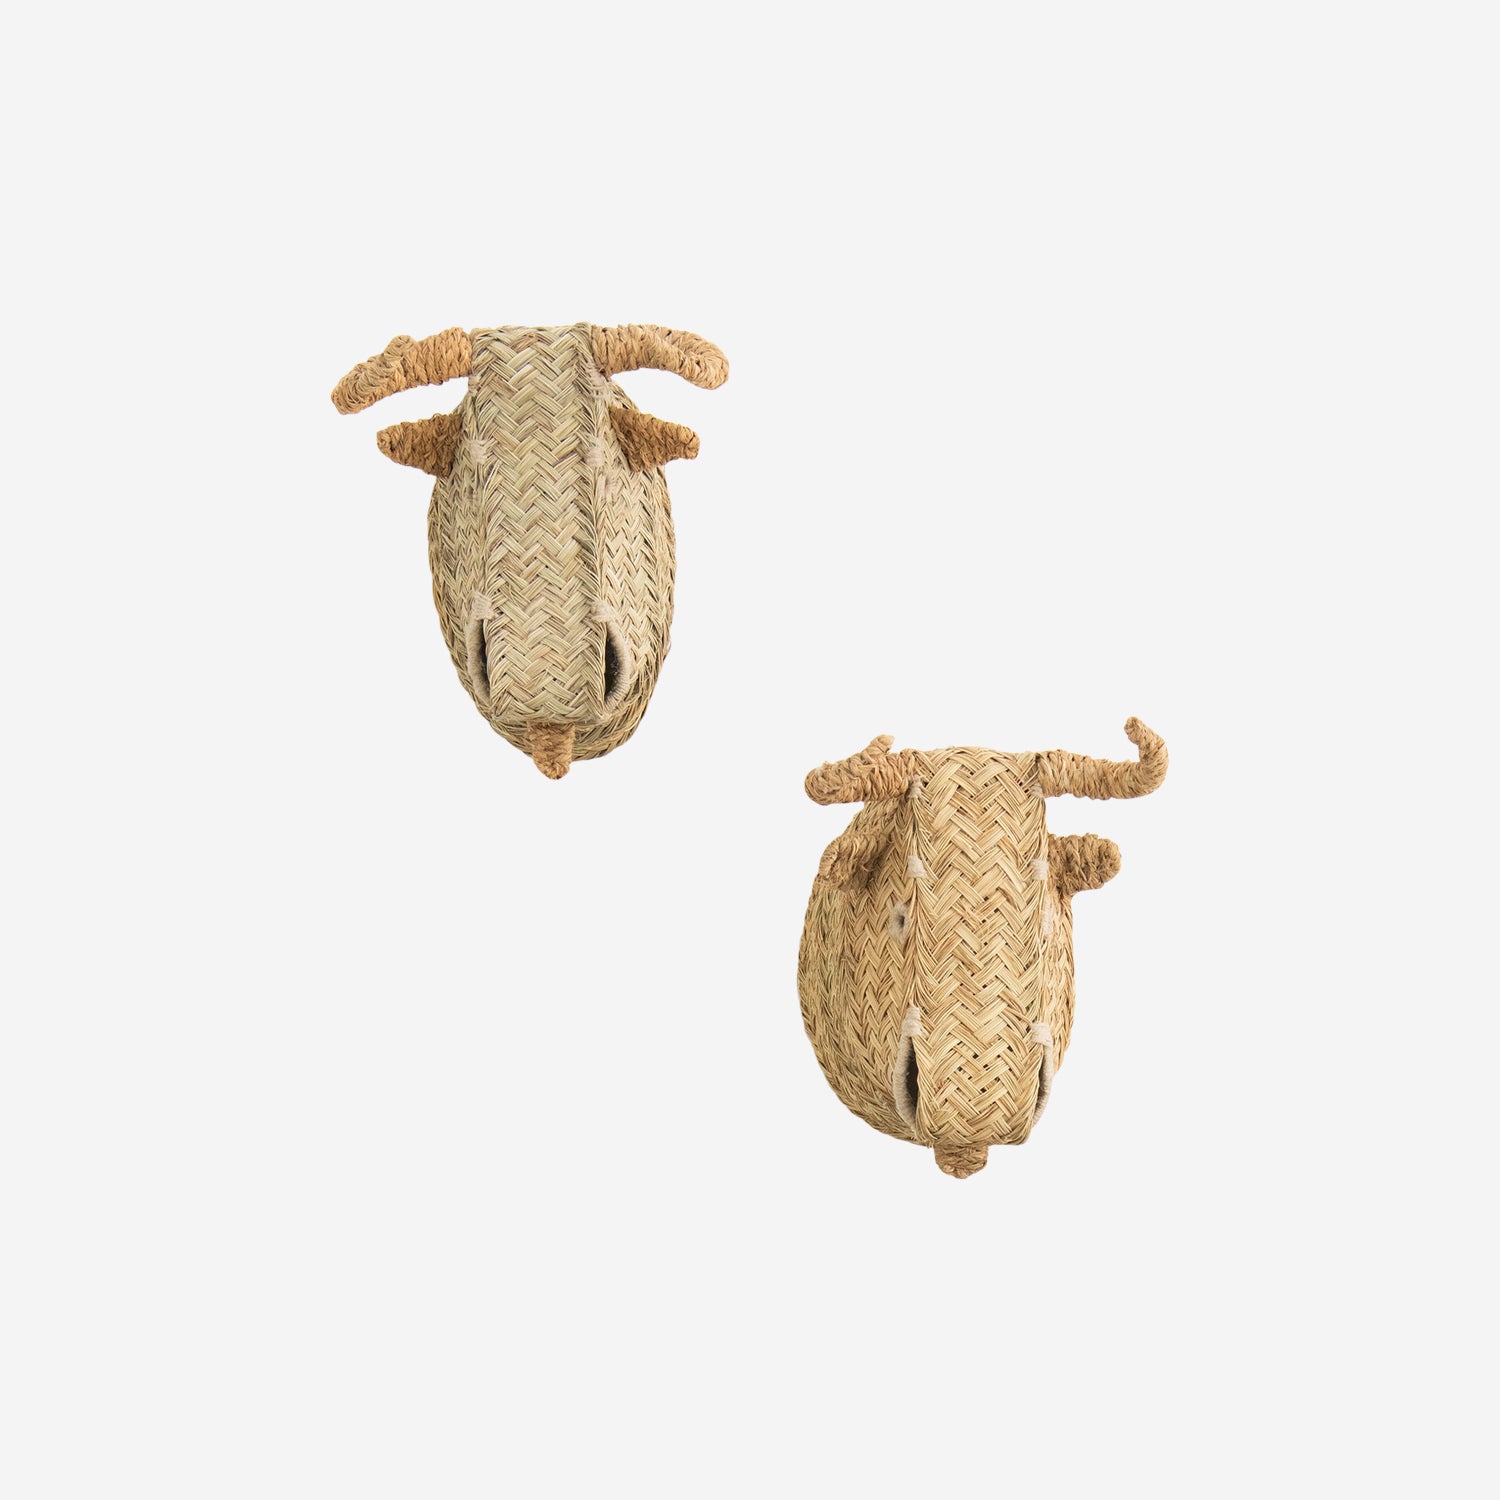 Handmade Natural Bull Heads